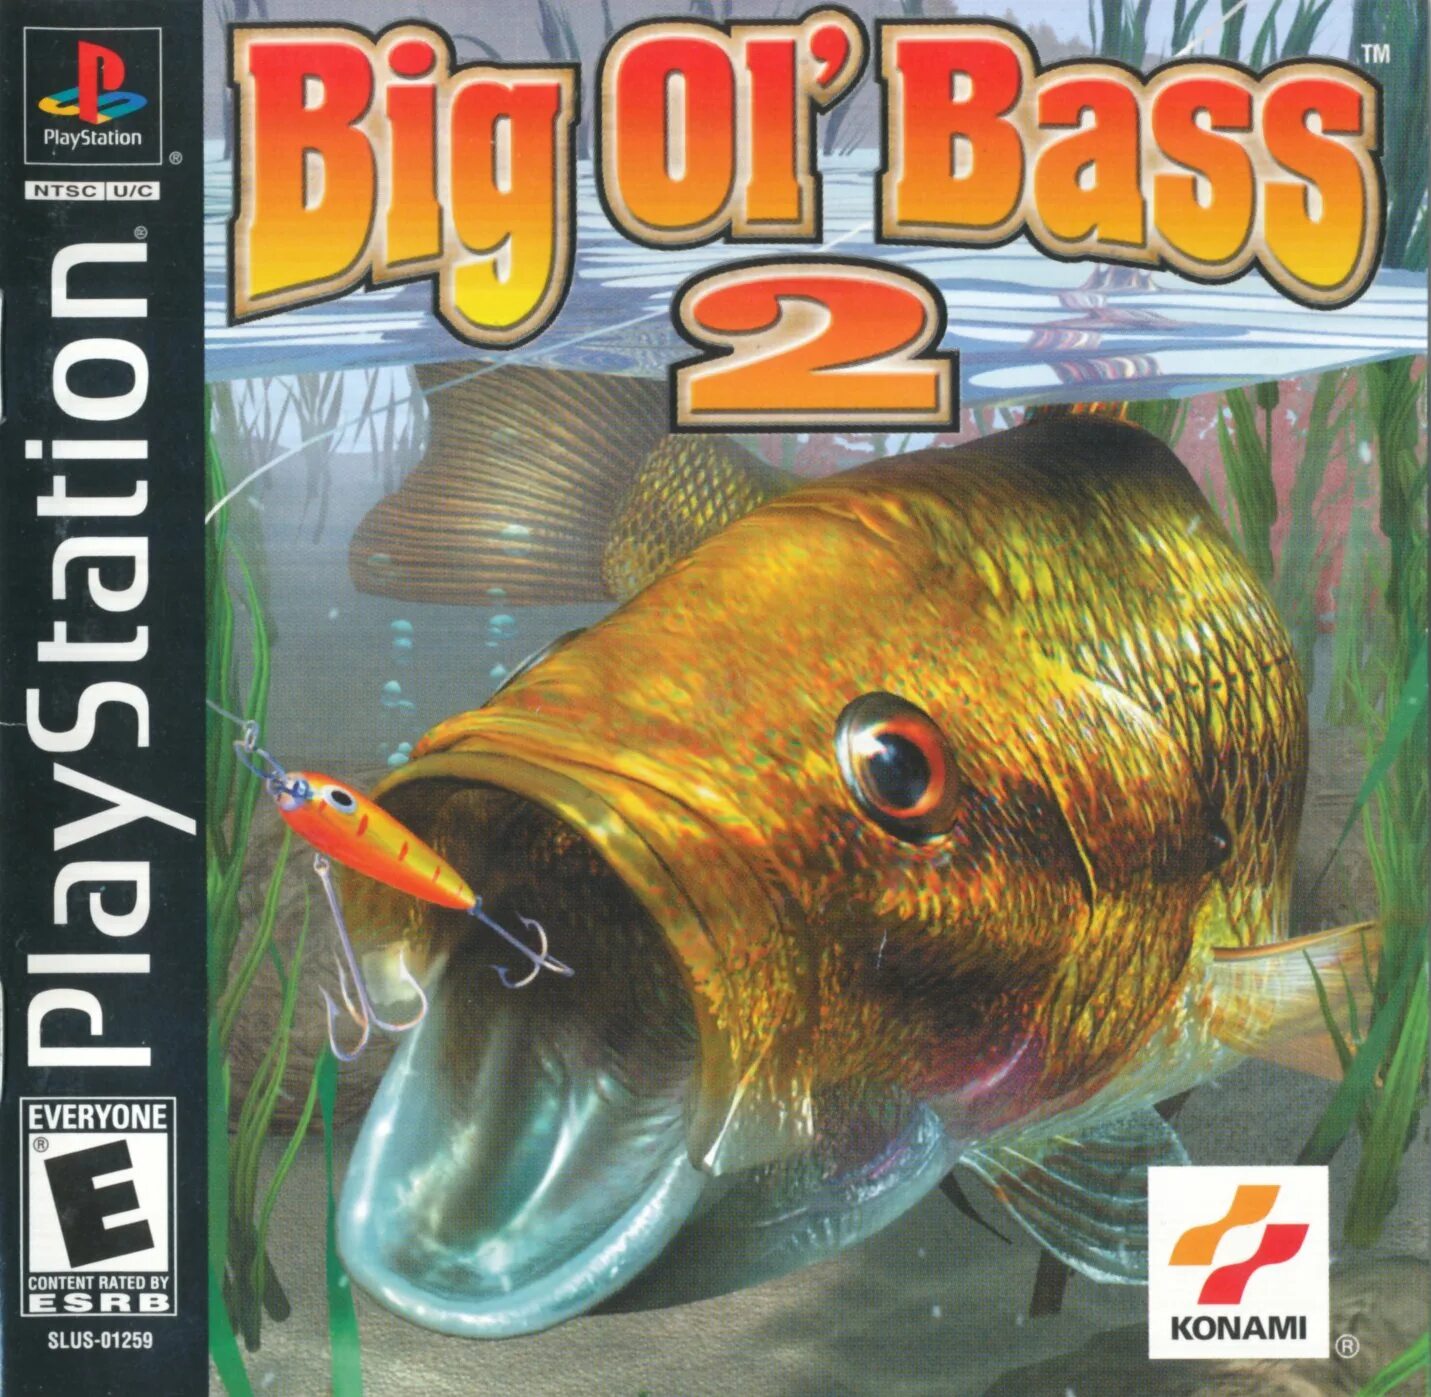 Big bass floats my. Fisherman's Bait 2: big ol' Bass. Fisherman's Bait 2 big ol Bass ps1 обложка. Big ol Bass 2 ps1. Fisherman's Bait - big ol' Bass 2 USA.